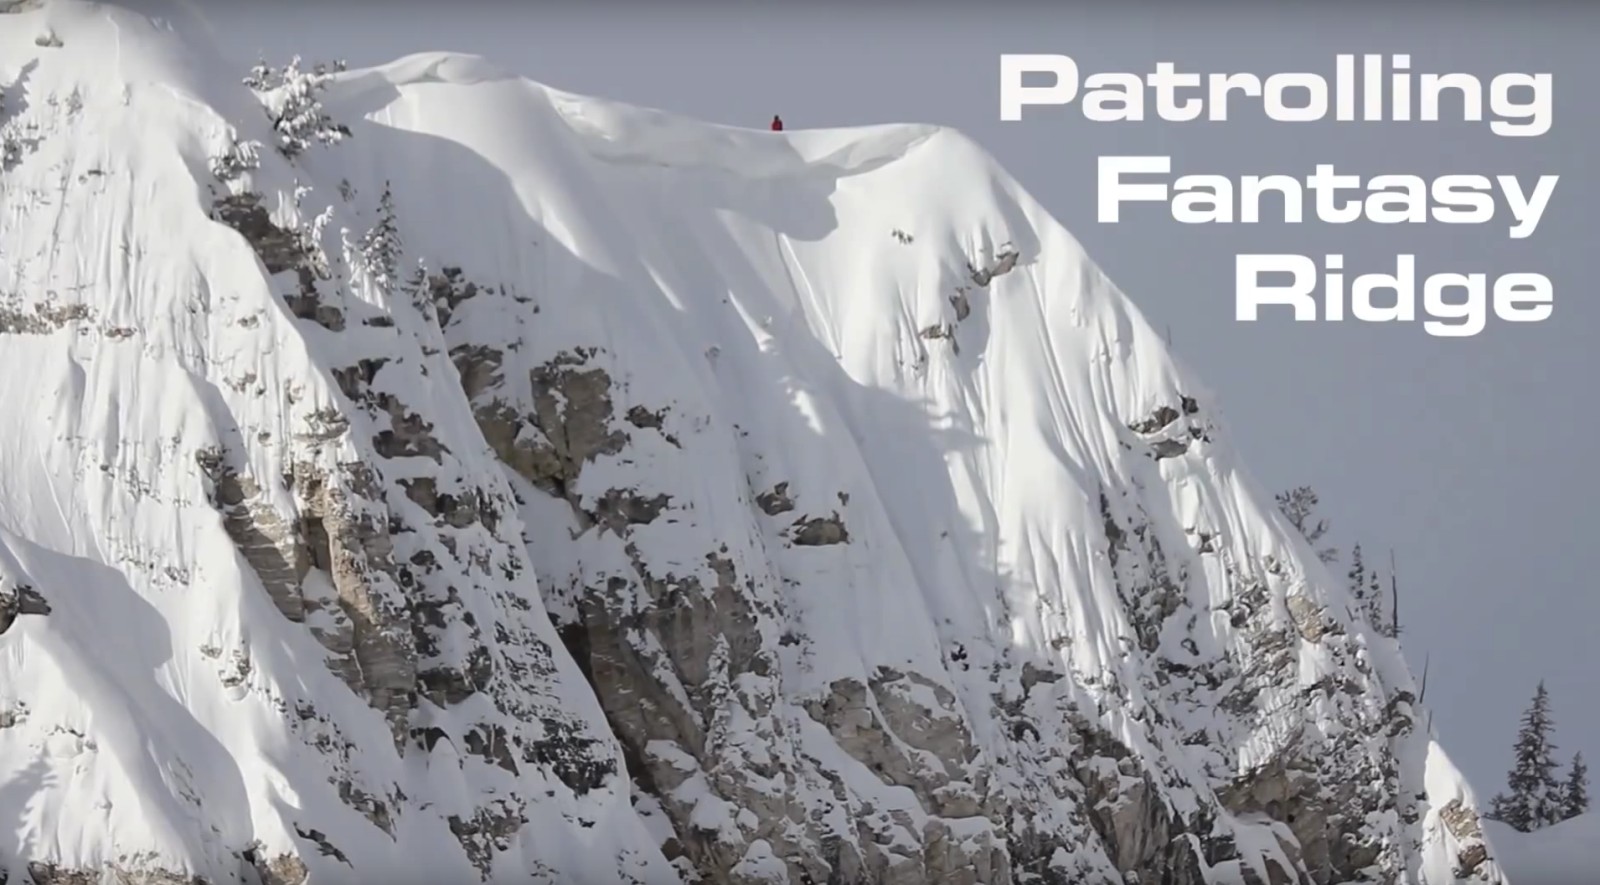 Patrolling Fantasy Ridge - Avalanche Control at Solitude - Powder Lounge